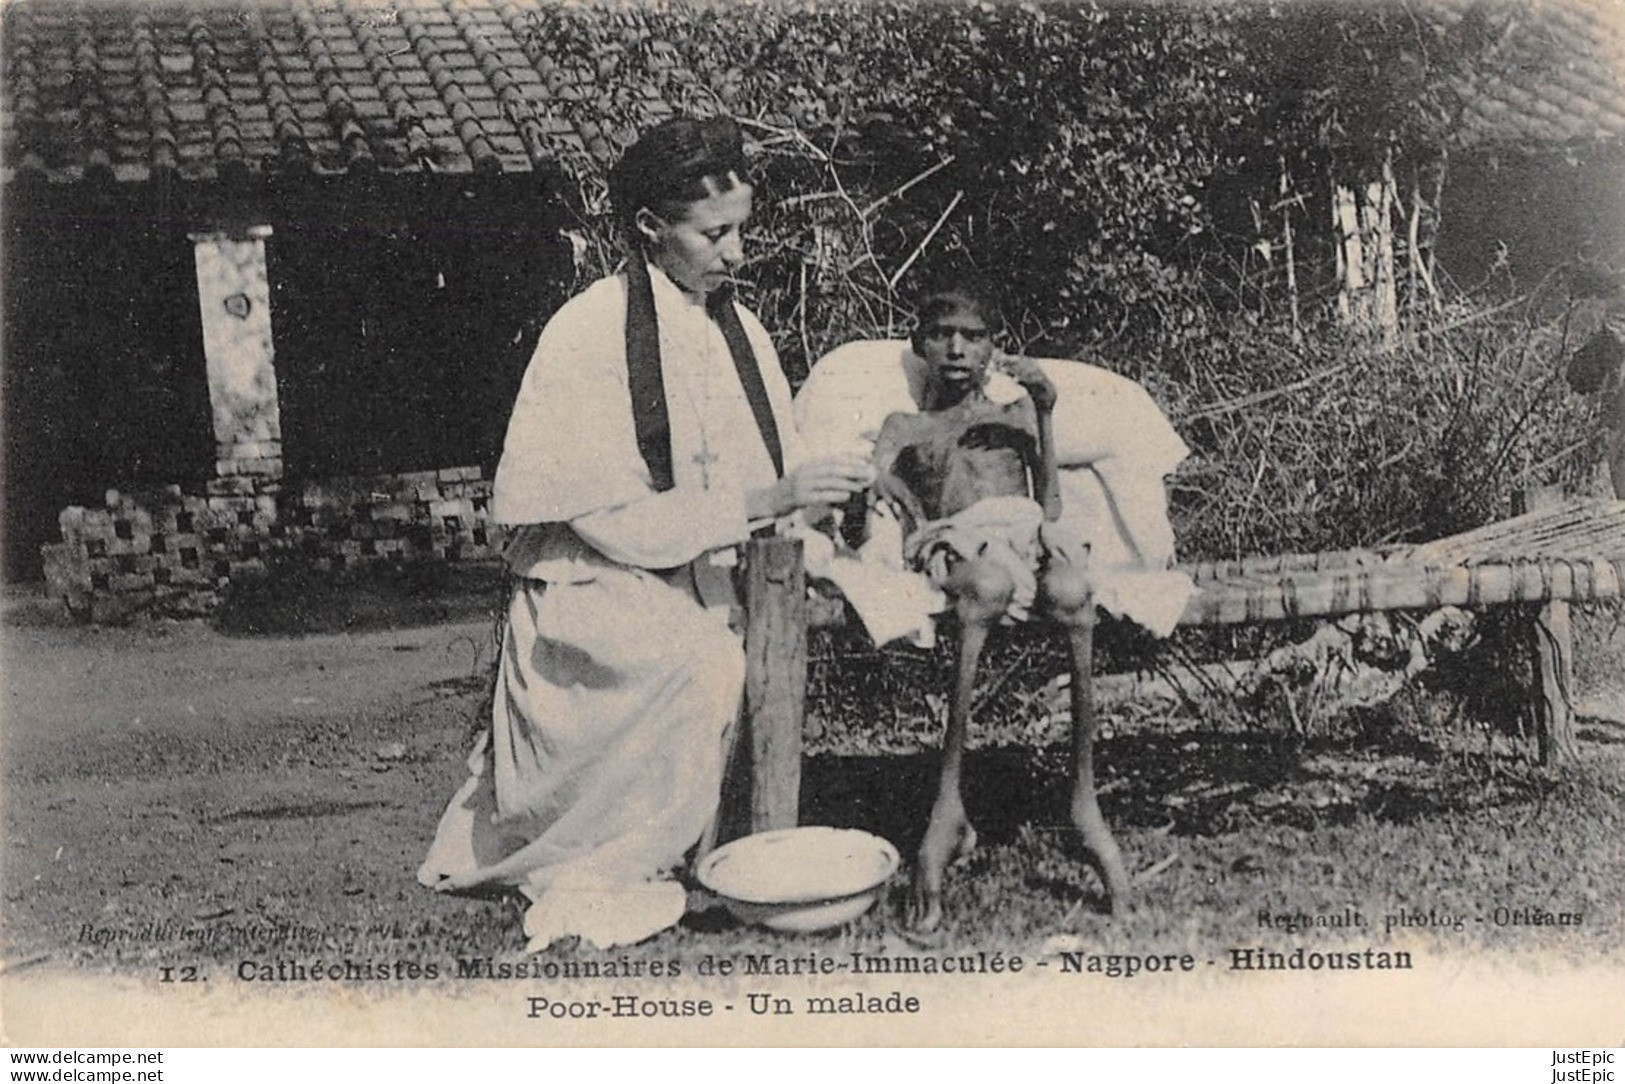 Catéchistes Missionnaires De Marie Immaculée - Nagpore - Hindoustan - Poor-house - Un Malade  Regnault Phot. Orléans Cpa - India